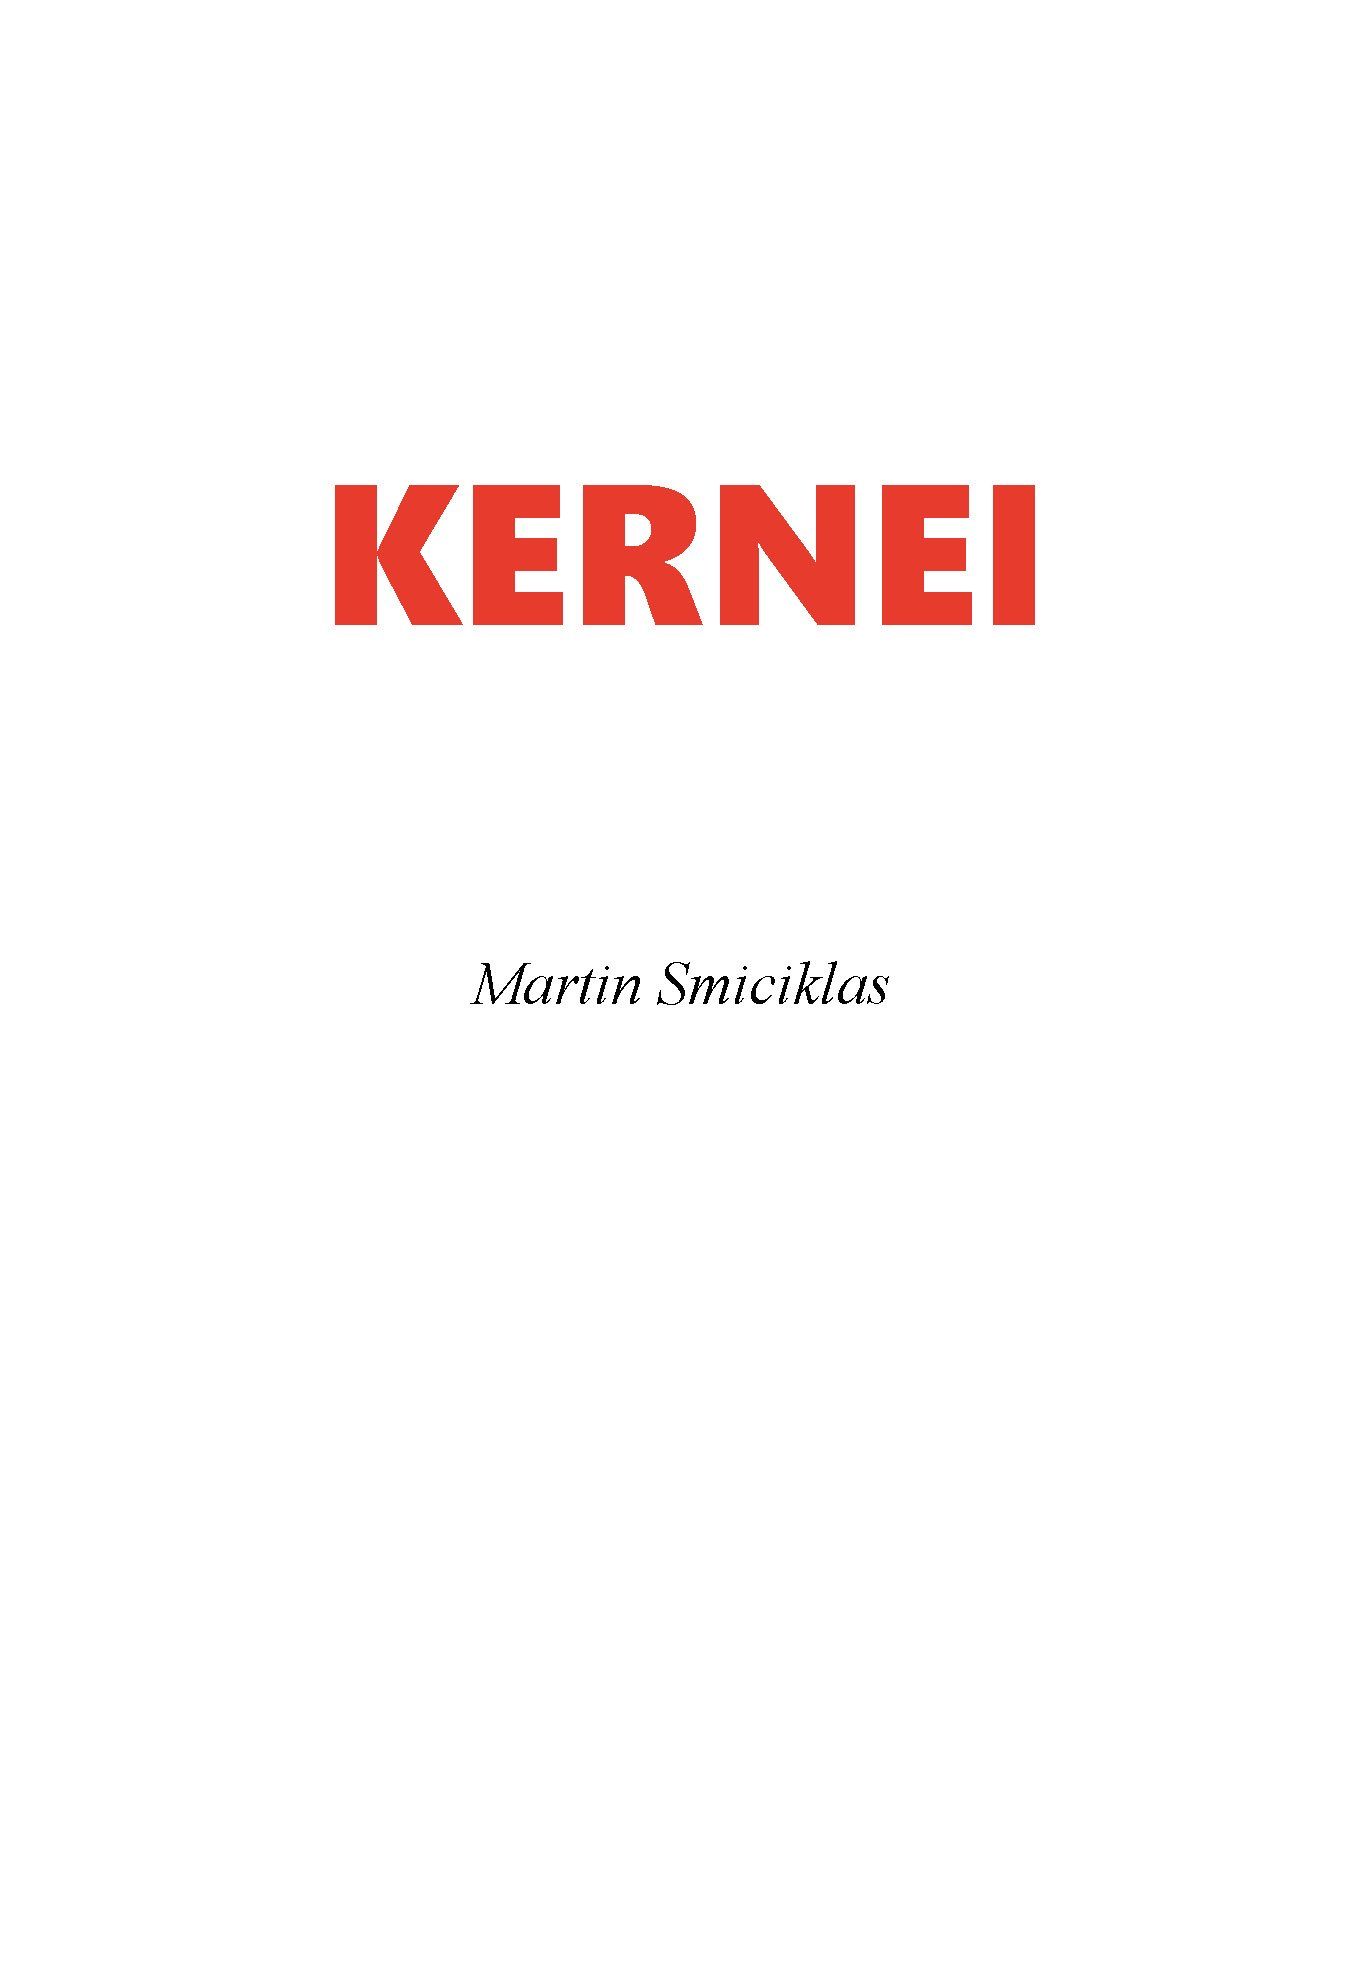 Kernei, eBook by Martin Smiciklas